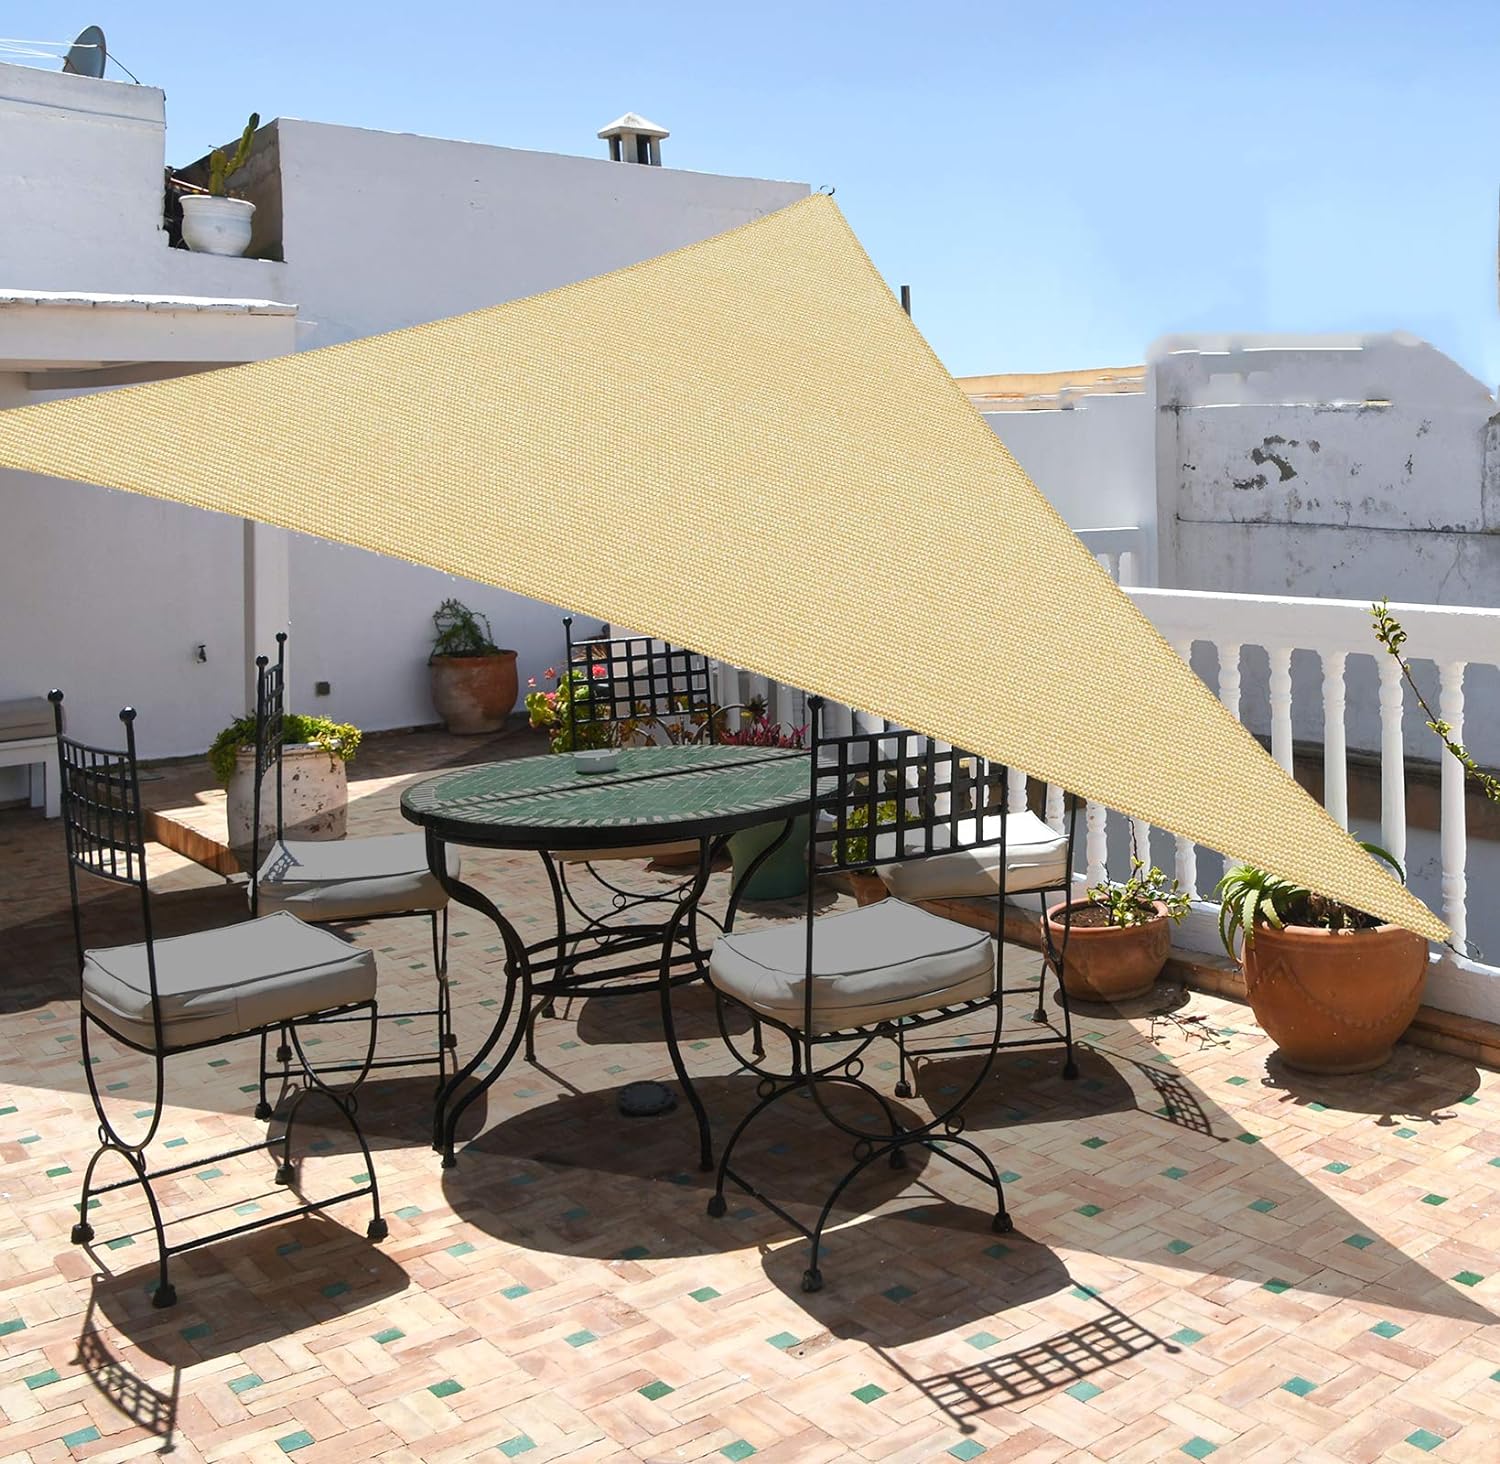 10'x10'x14' Garden Expert Triangle Sun Shade Sail Canopy (Sand, Terra) $9.99 + F/S w/ Prime or on Orders $35+